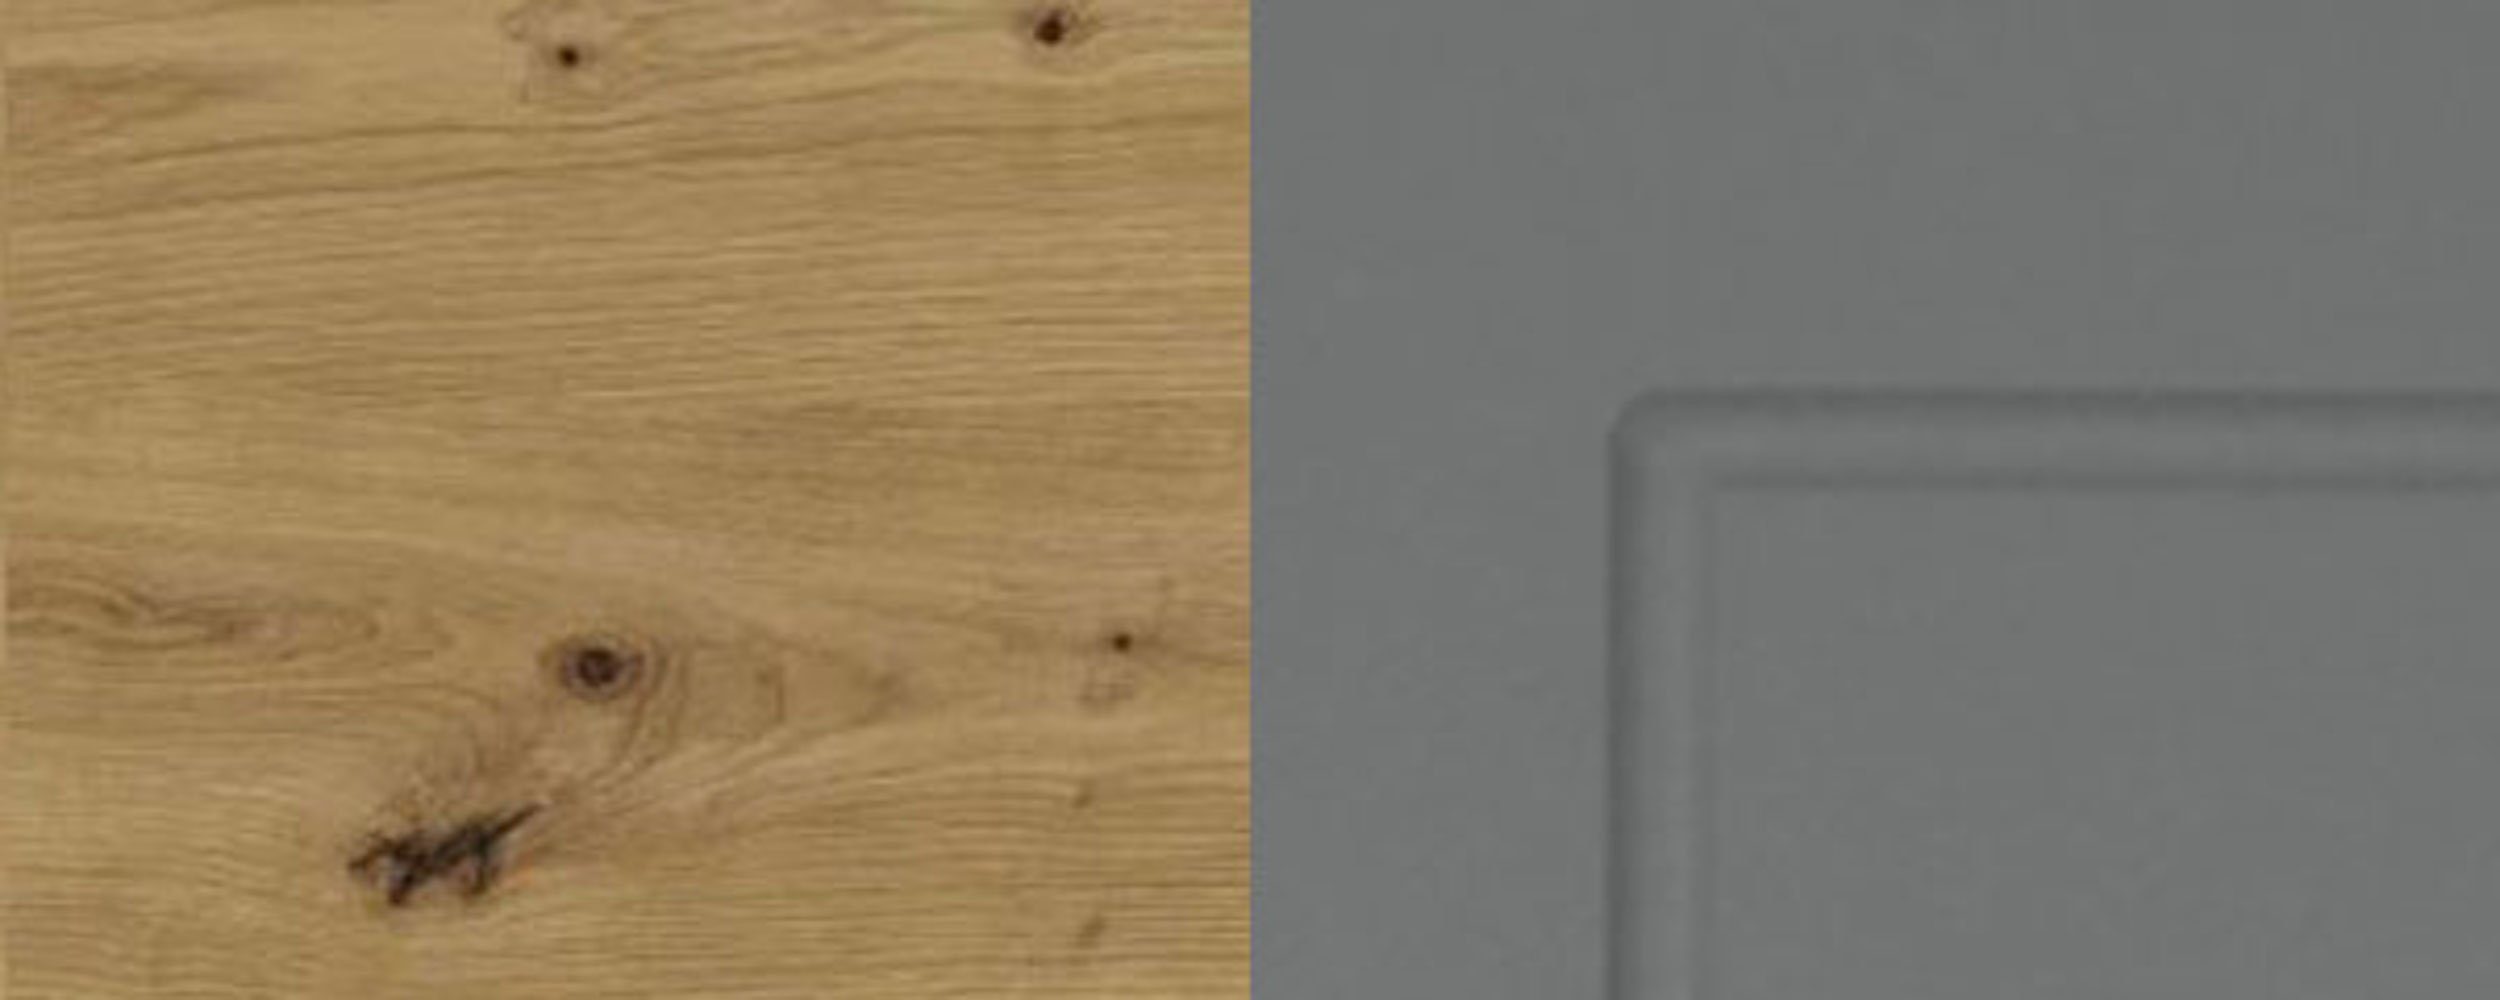 Ausführung Feldmann-Wohnen grey Sockel-, wählbar dust und Frontfarbe matt Kvantum, Sockelblende